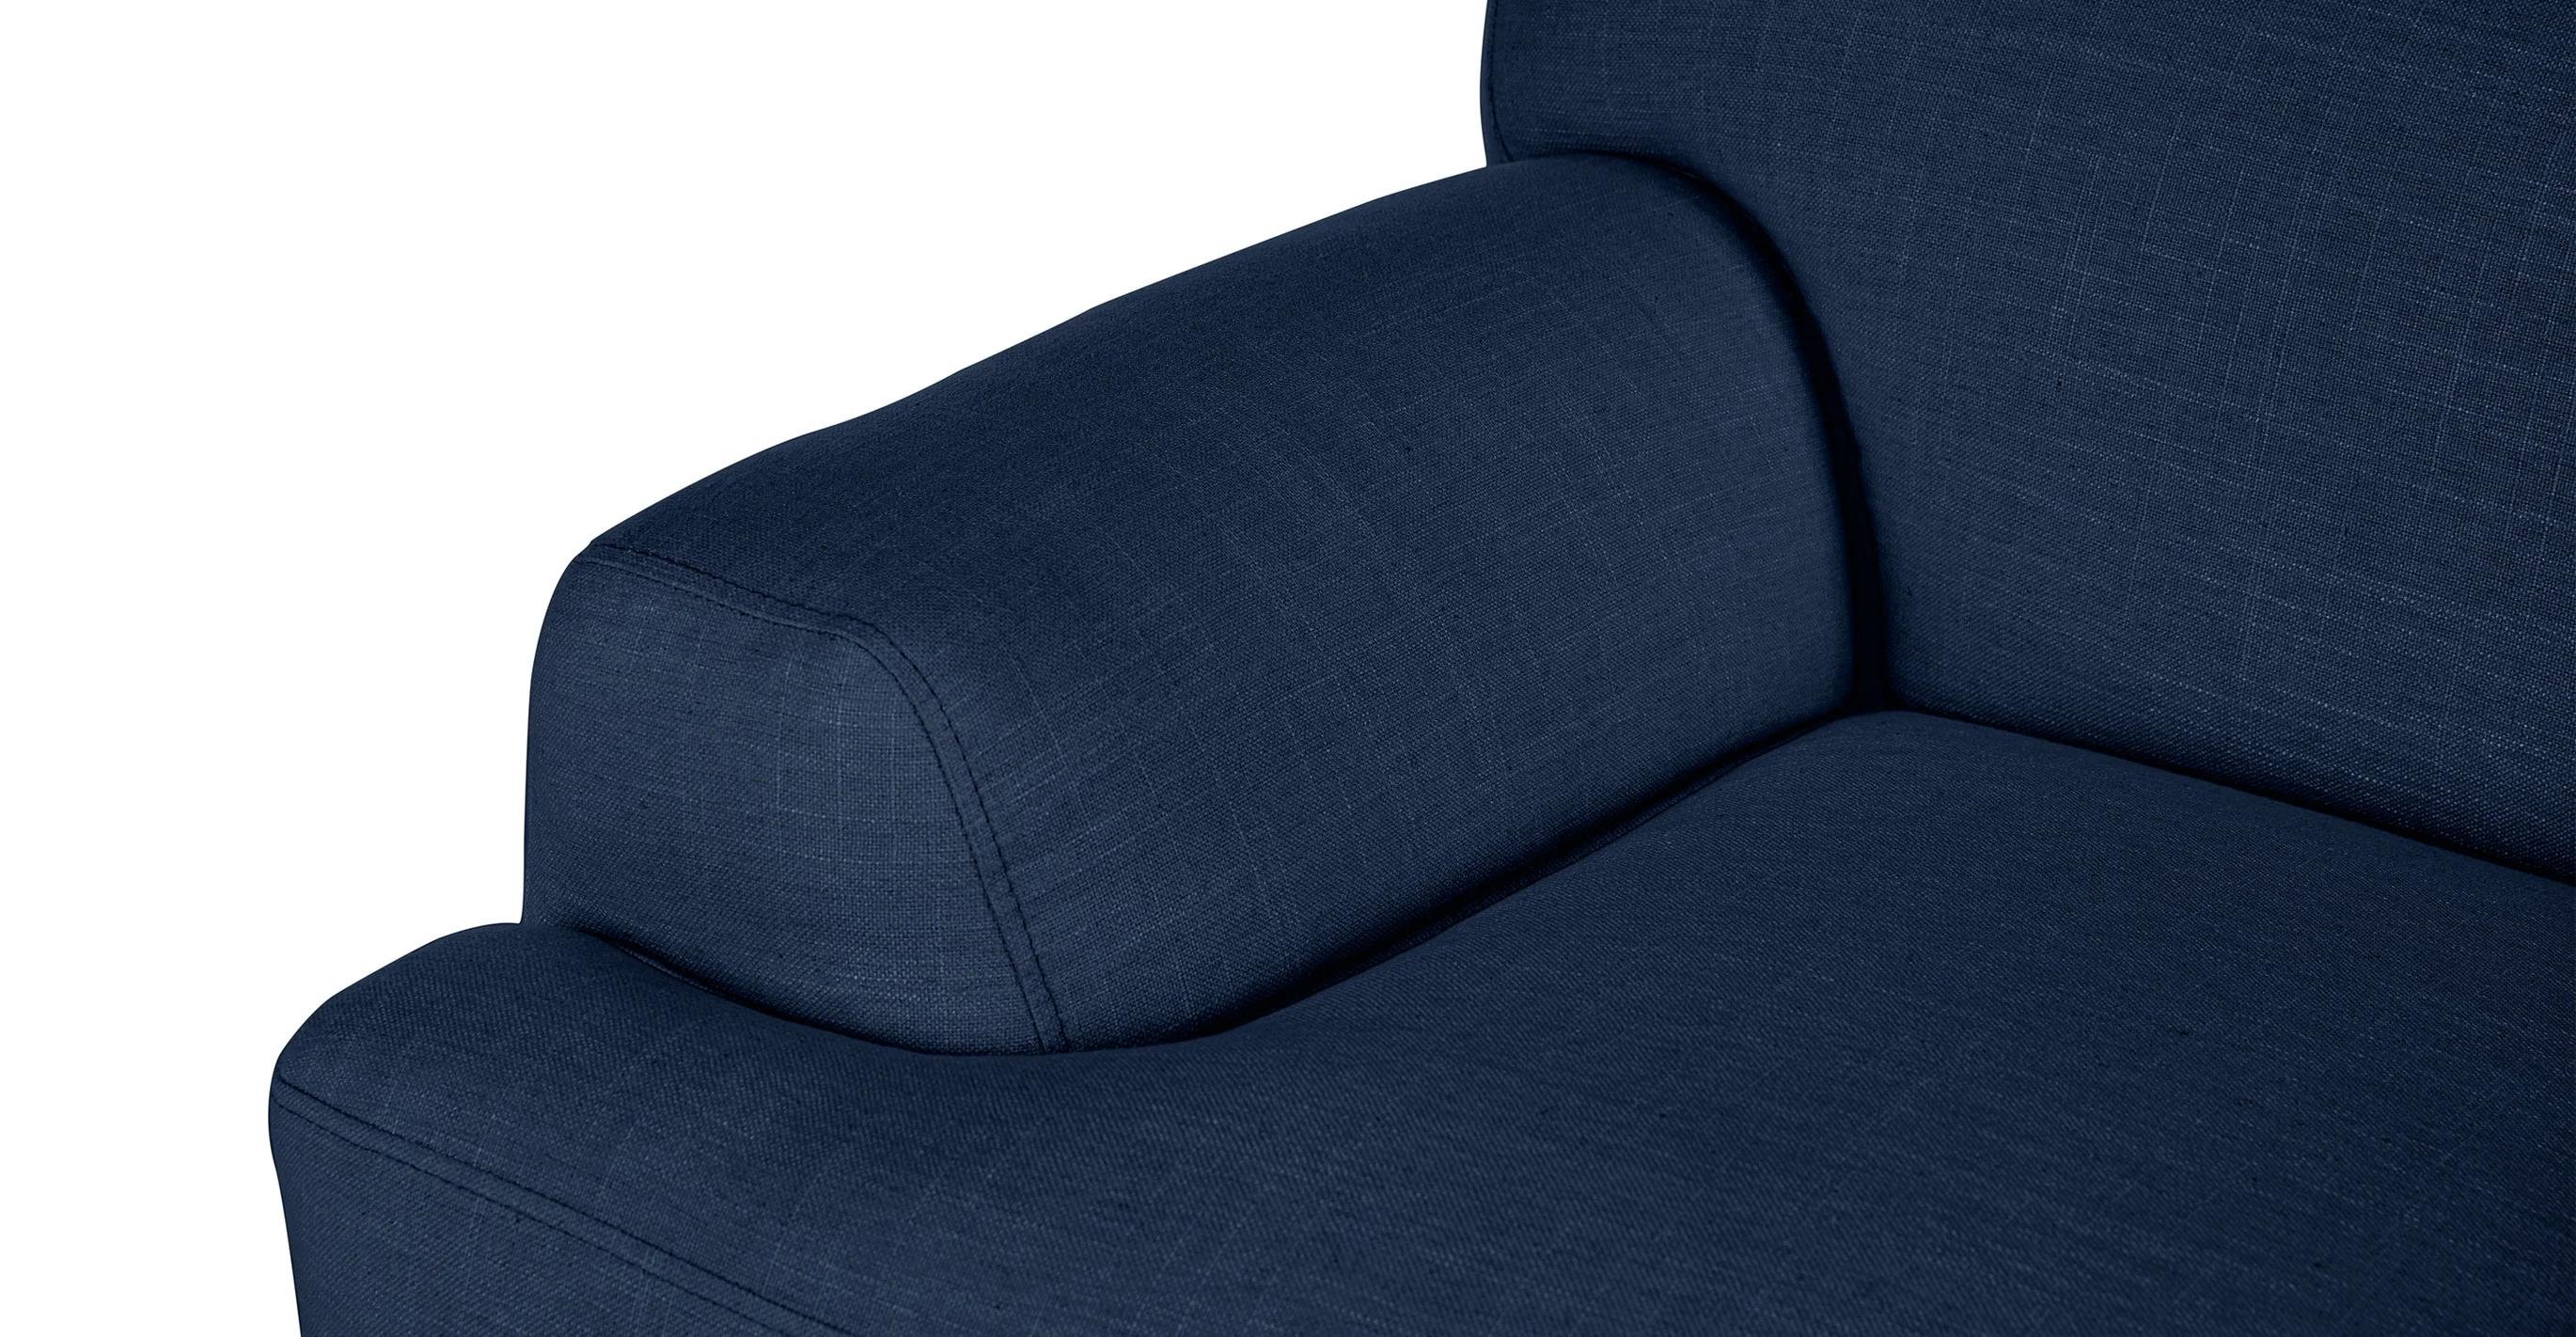 Abisko Lounge Chair, Aurora Blue - Image 8